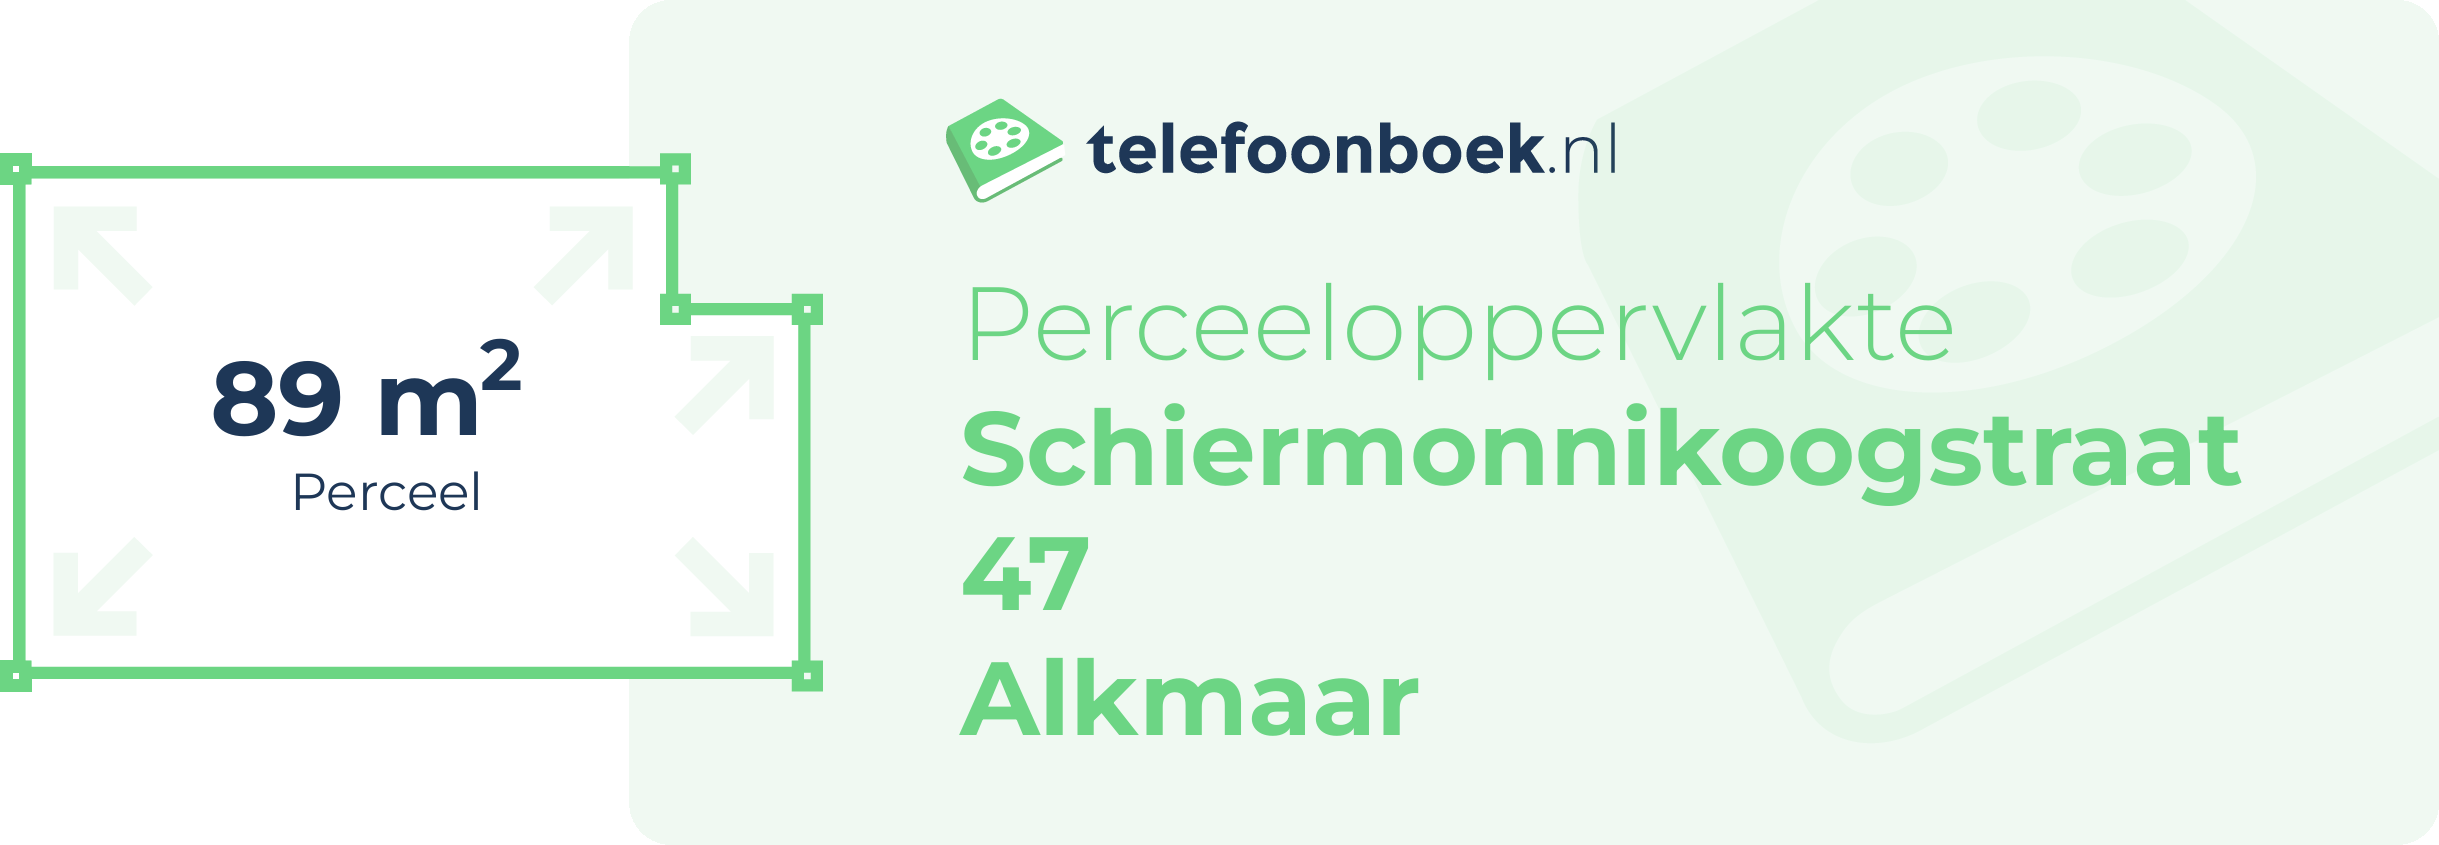 Perceeloppervlakte Schiermonnikoogstraat 47 Alkmaar